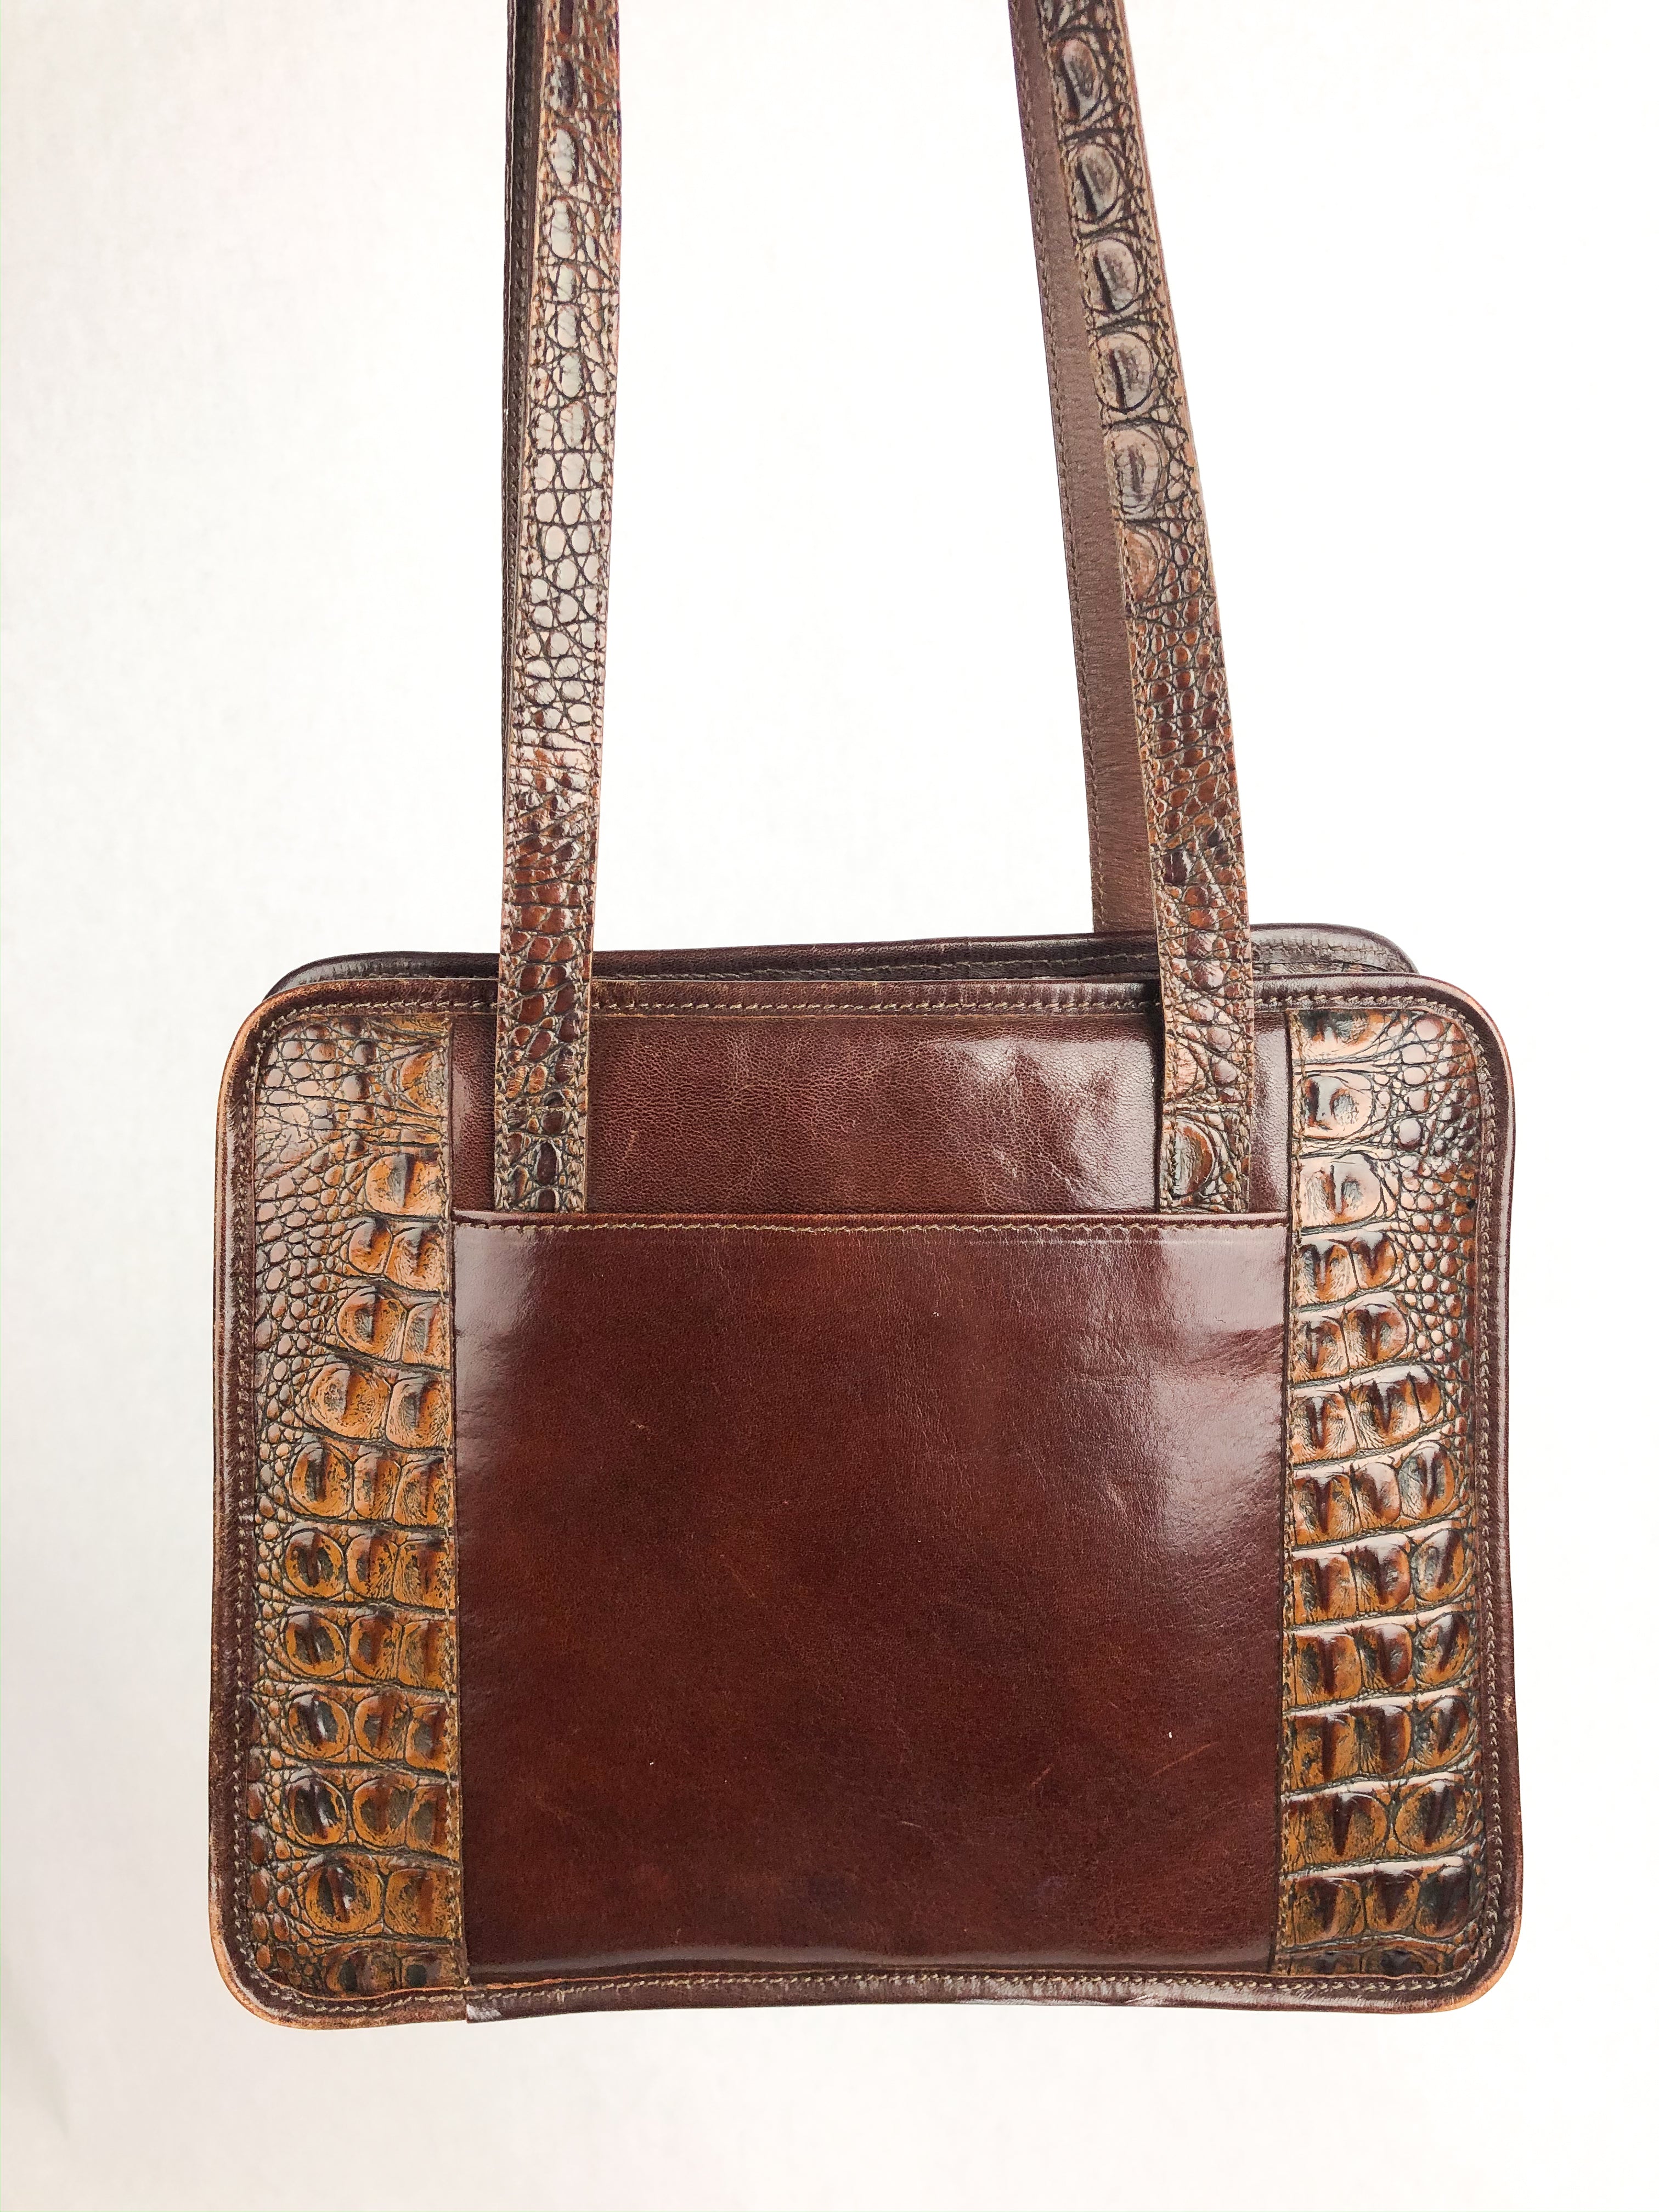 Brahmin Anytime Mini Satchel Pecan Leather Shoulder Bag New with Tag | eBay